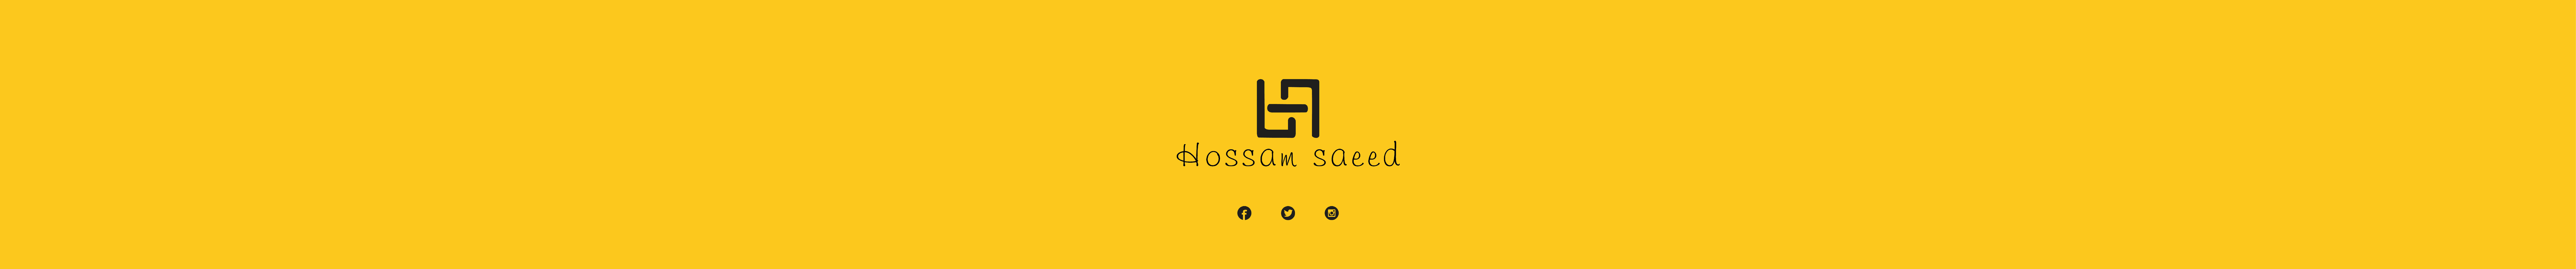 Баннер профиля Hossam saeed